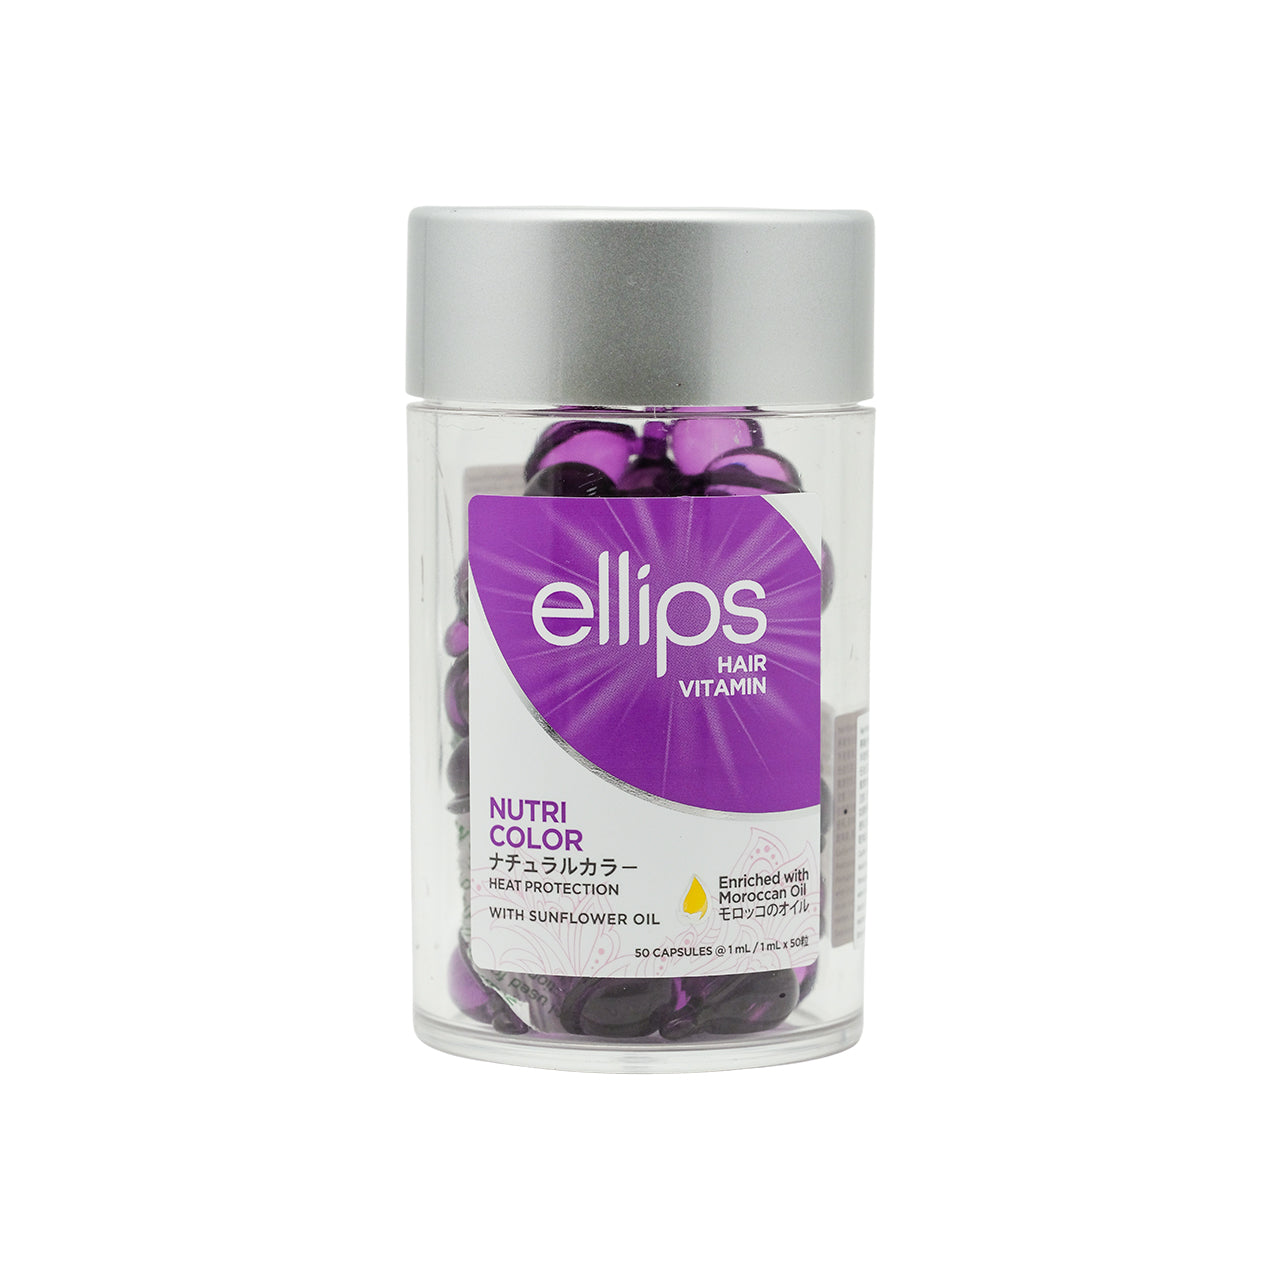 Ellips Hair Vitamin Nutri Color | Sasa Global eShop